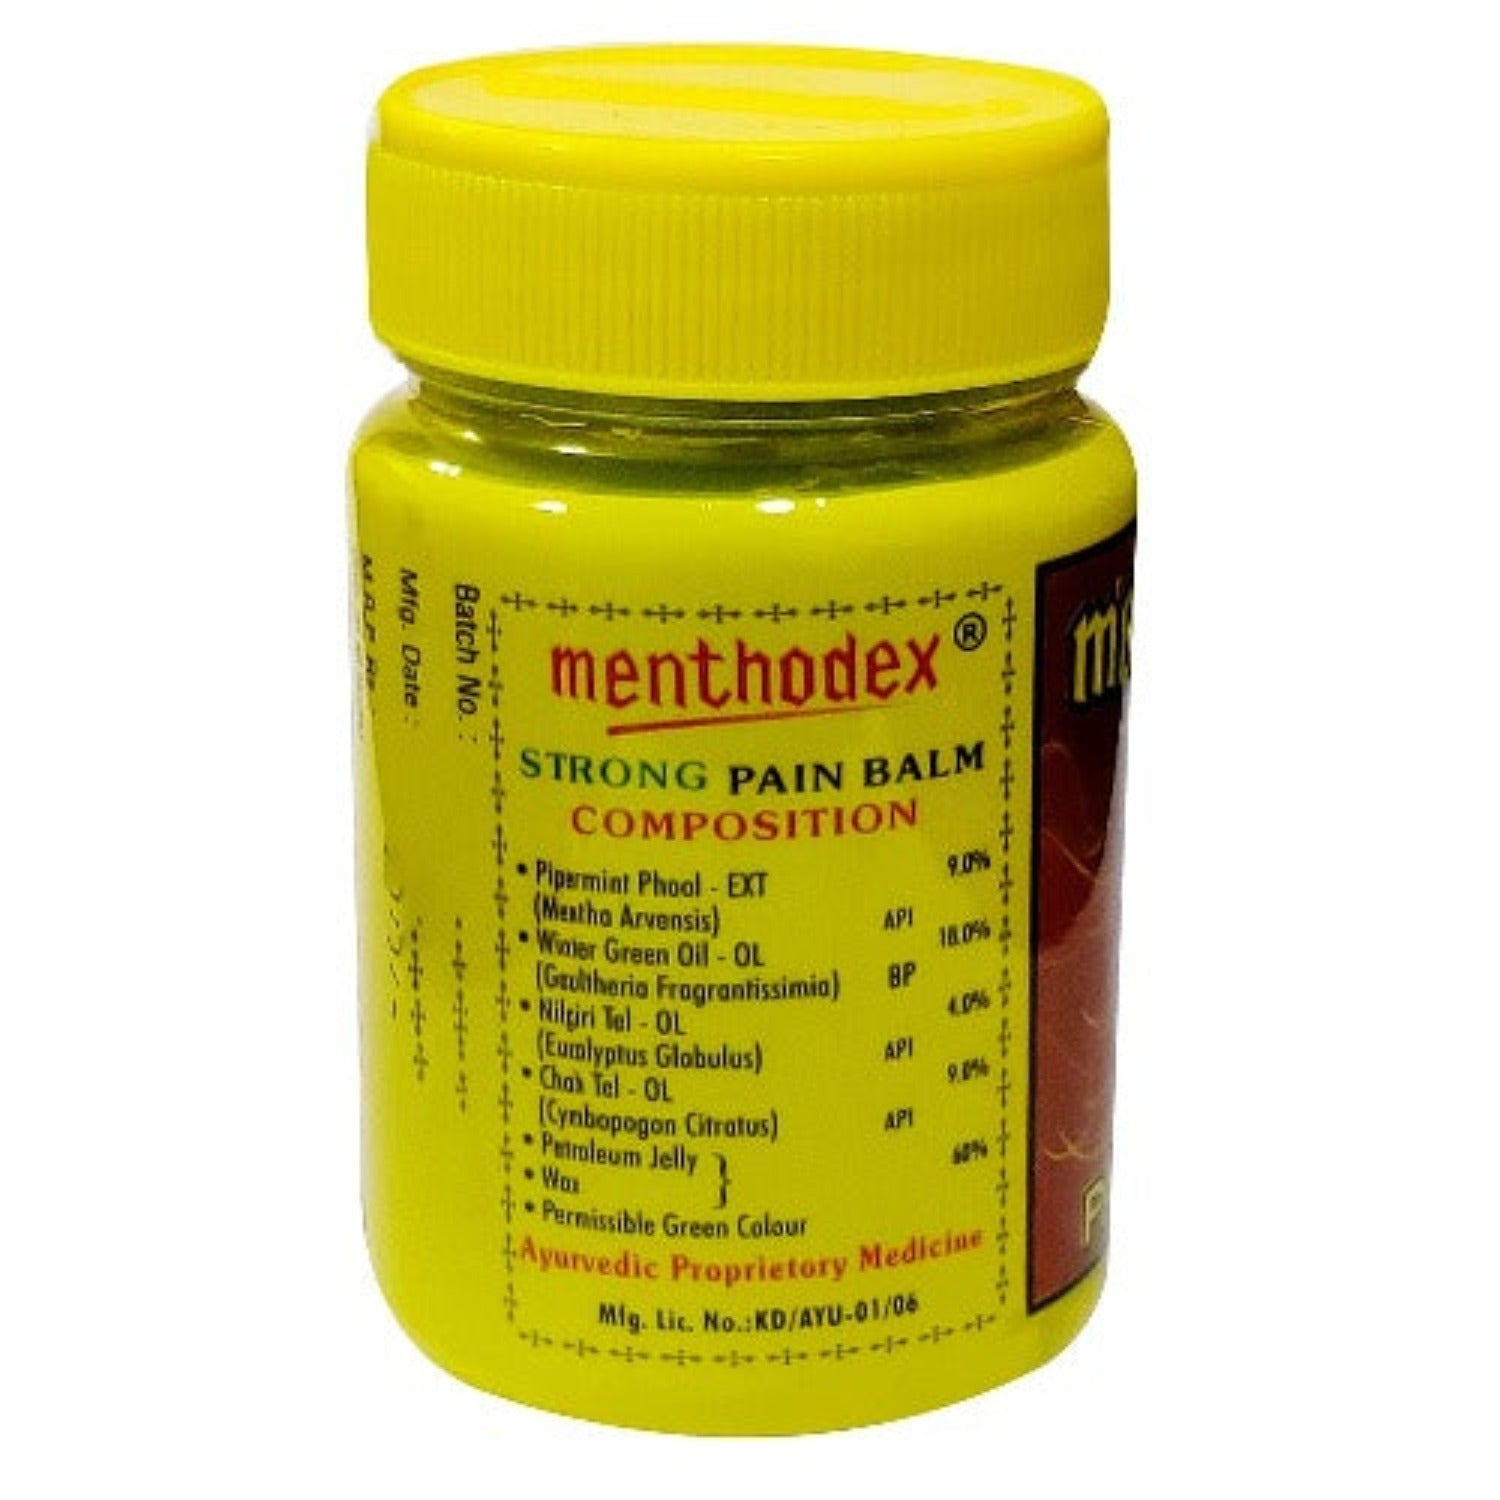 Doshi Laboratories Ayurvedic Menthodex Pain Balm